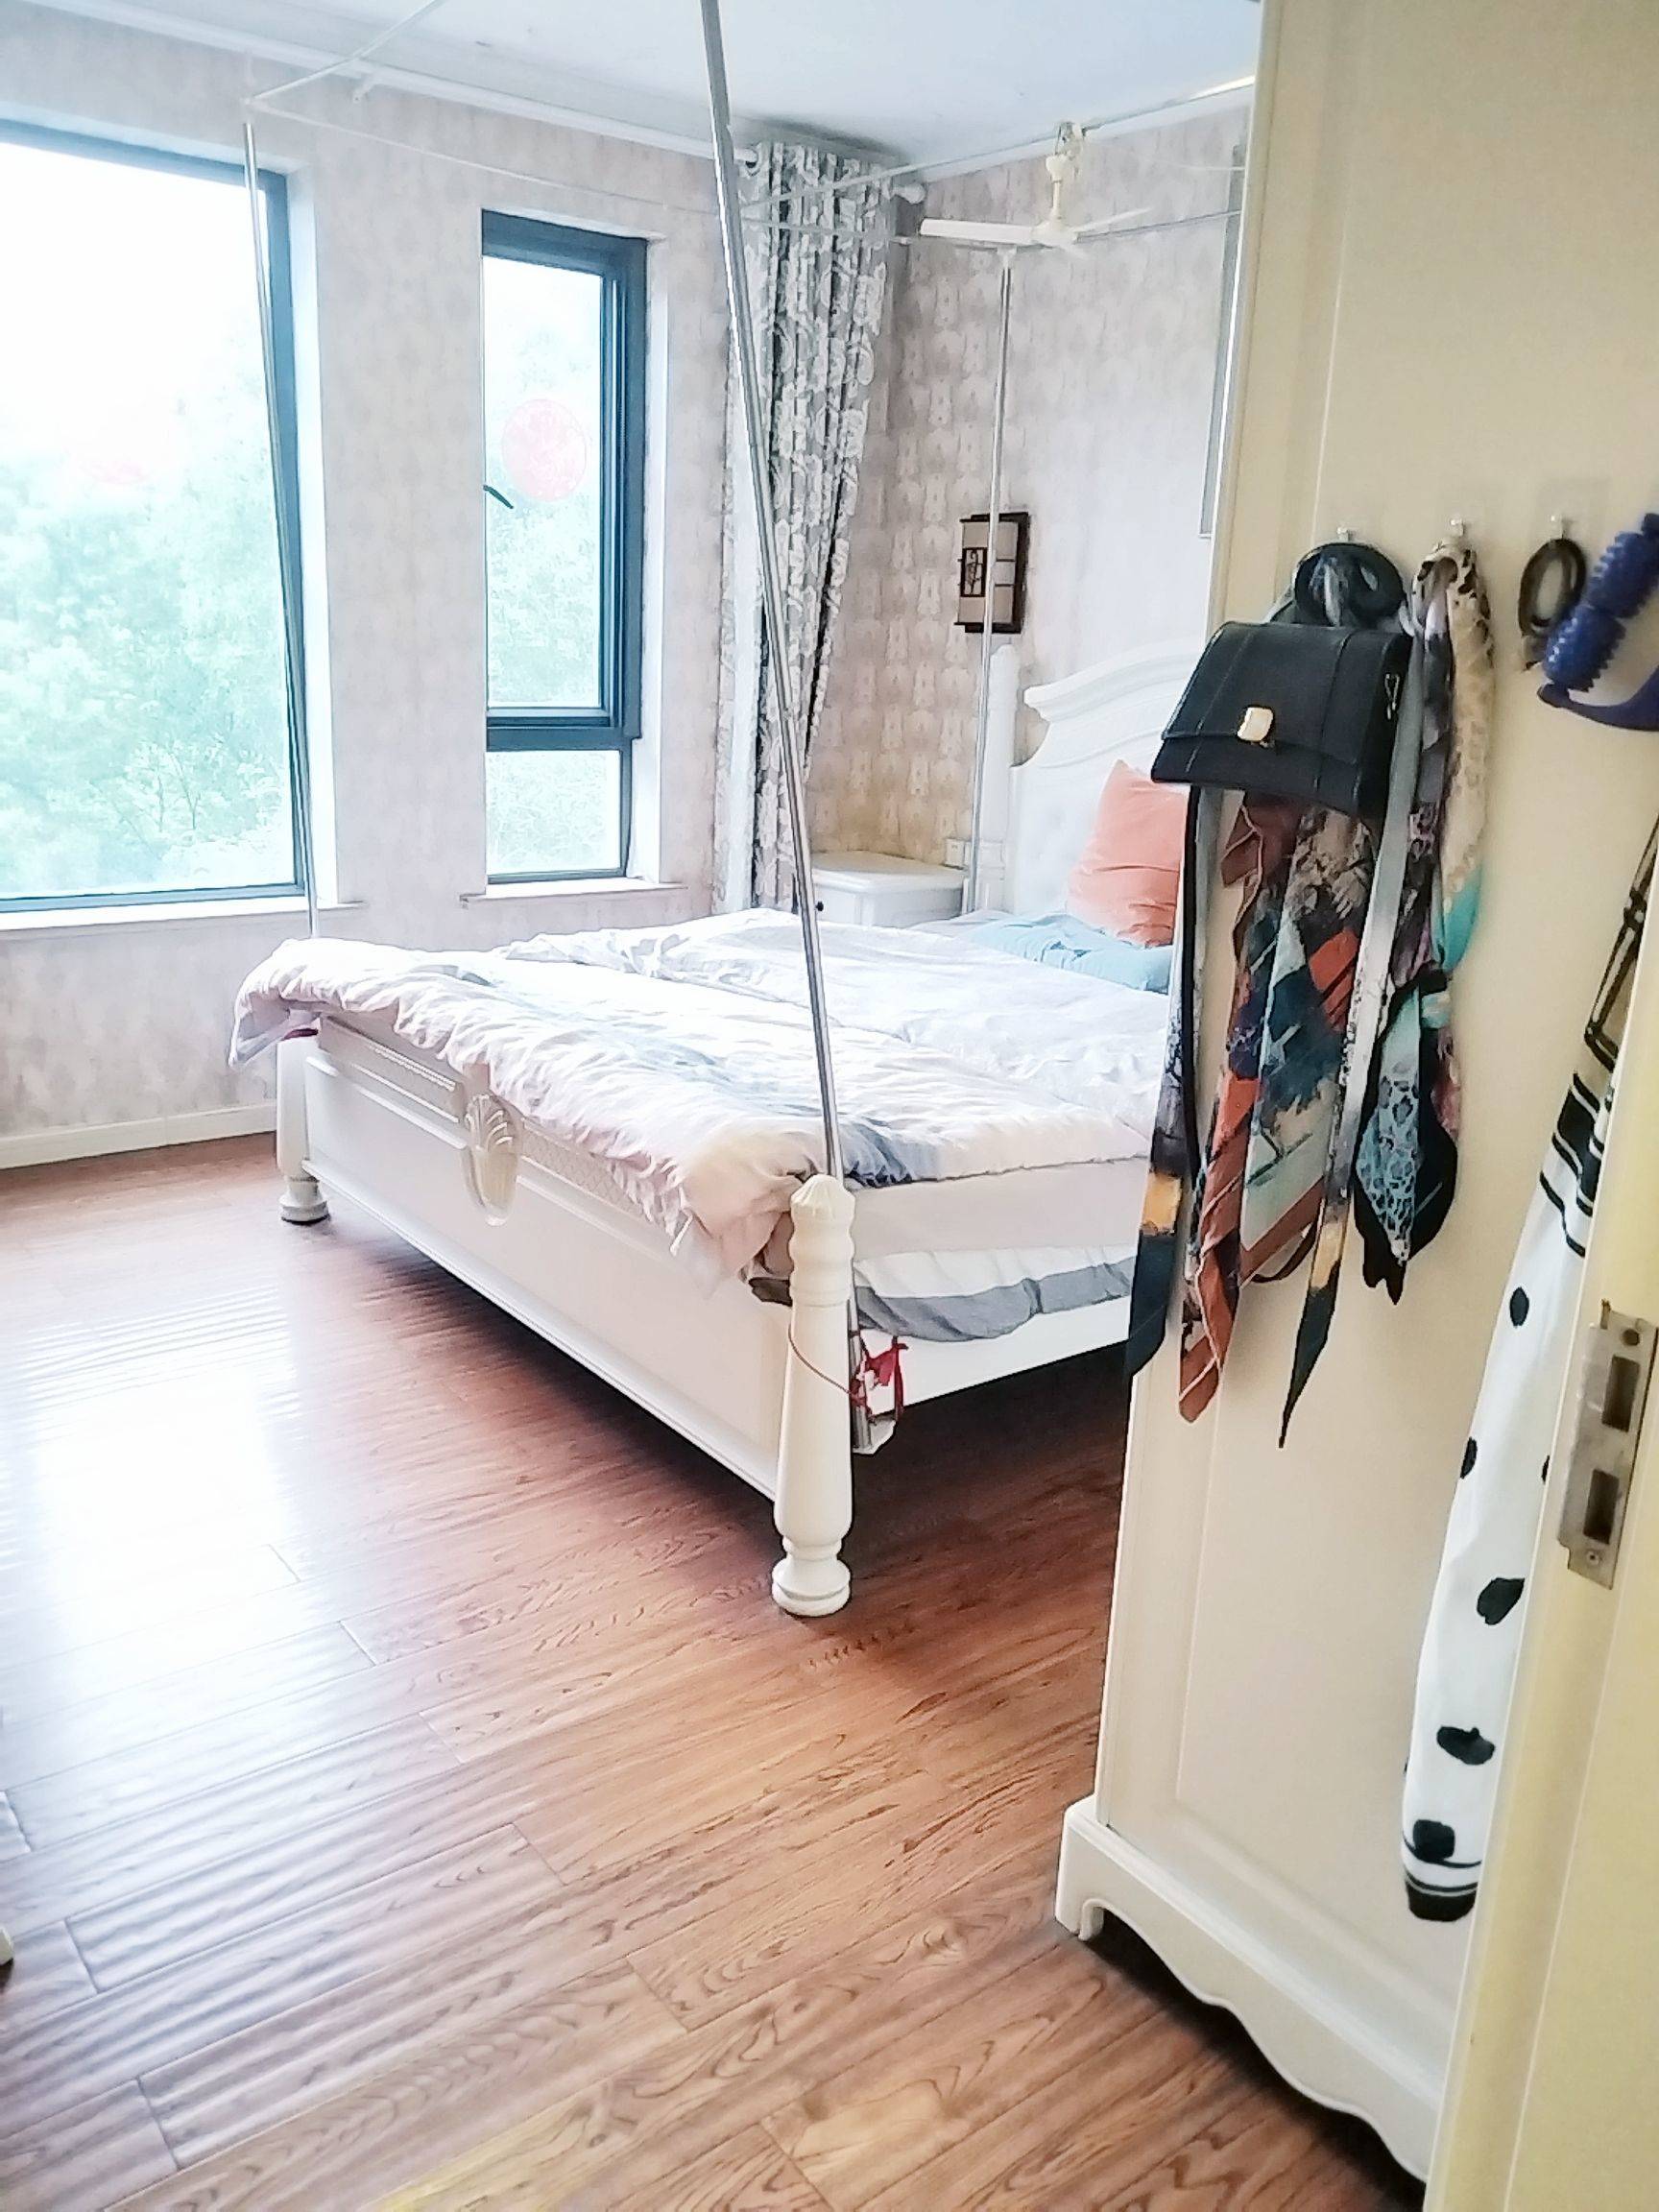 Suzhou-Huqiu-Cozy Home,Clean&Comfy